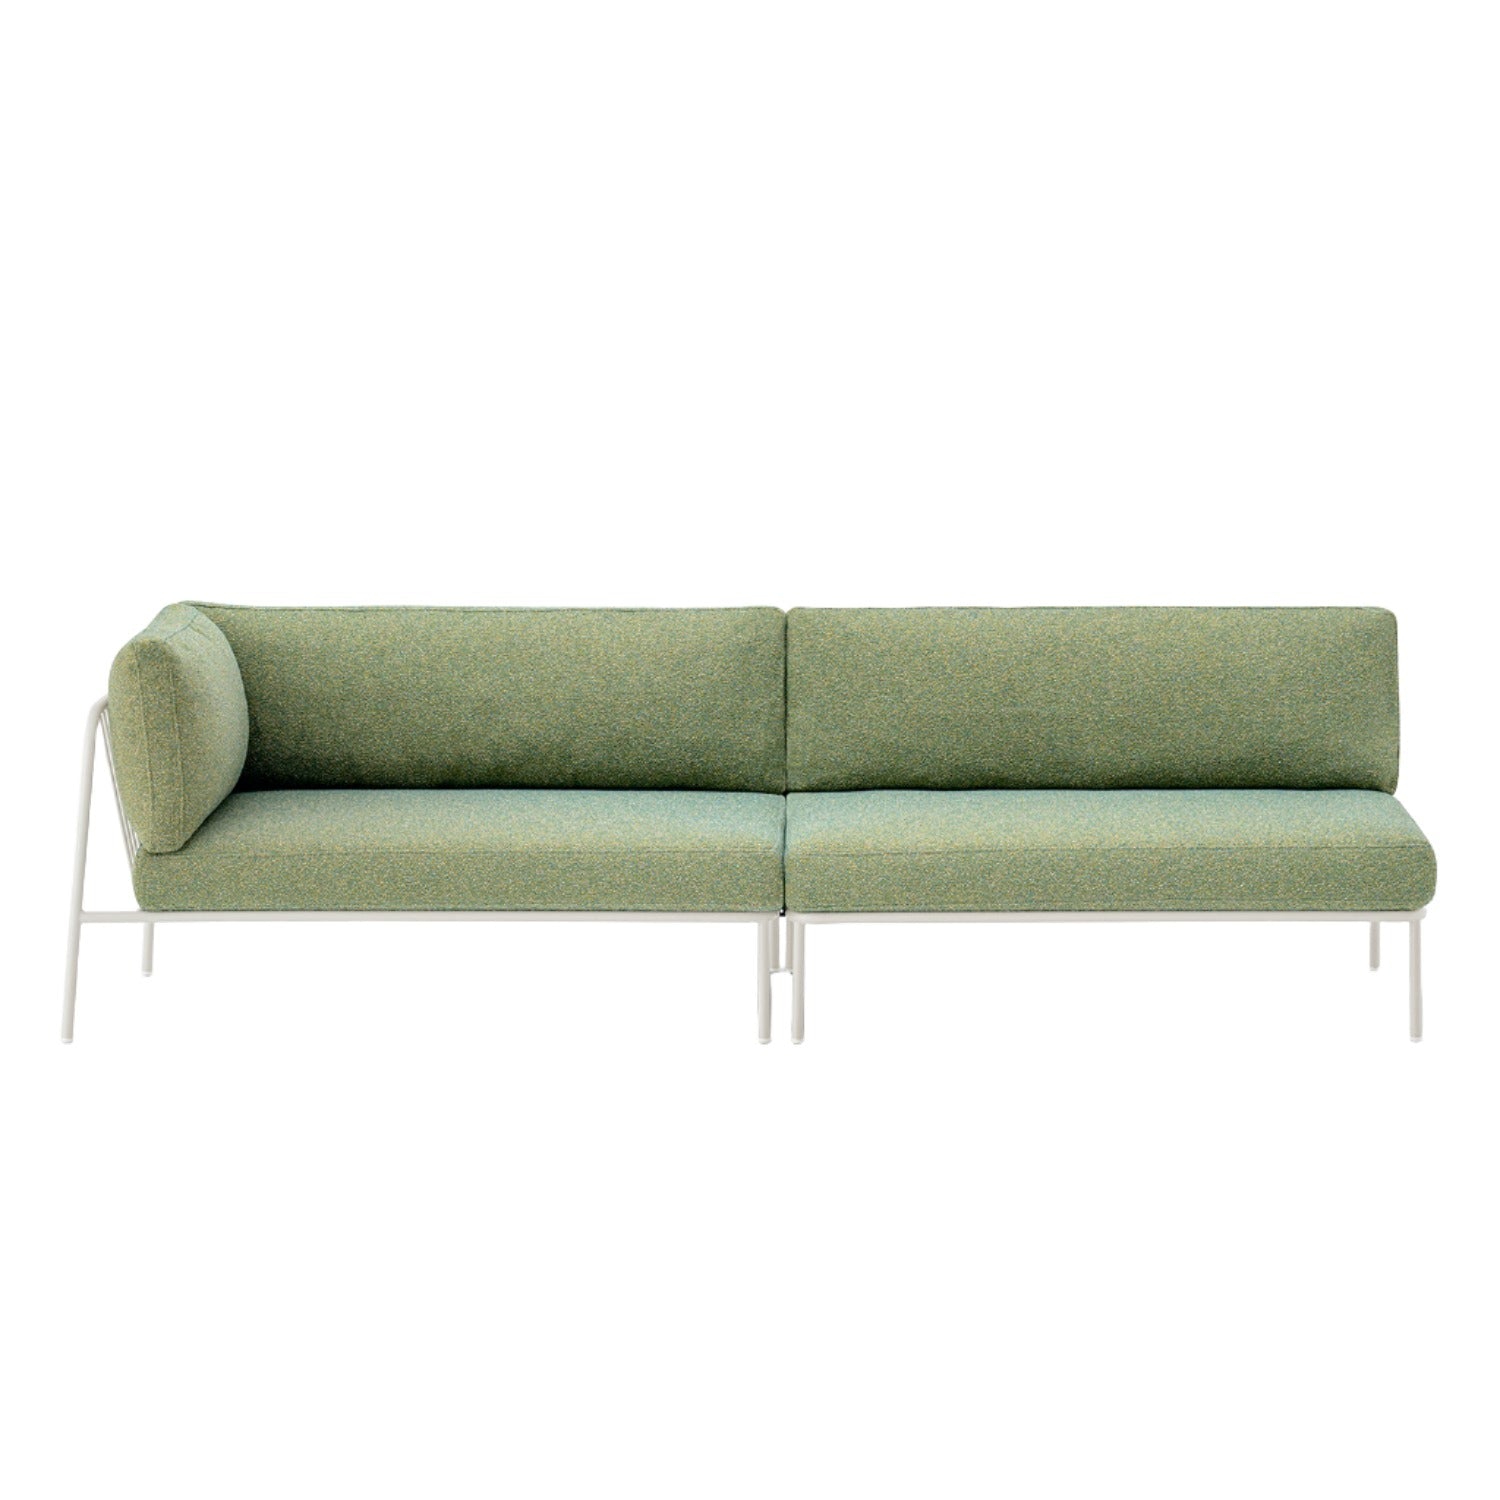 Pedrali Nolita Modular Outdoor Sofa in white with green cushions